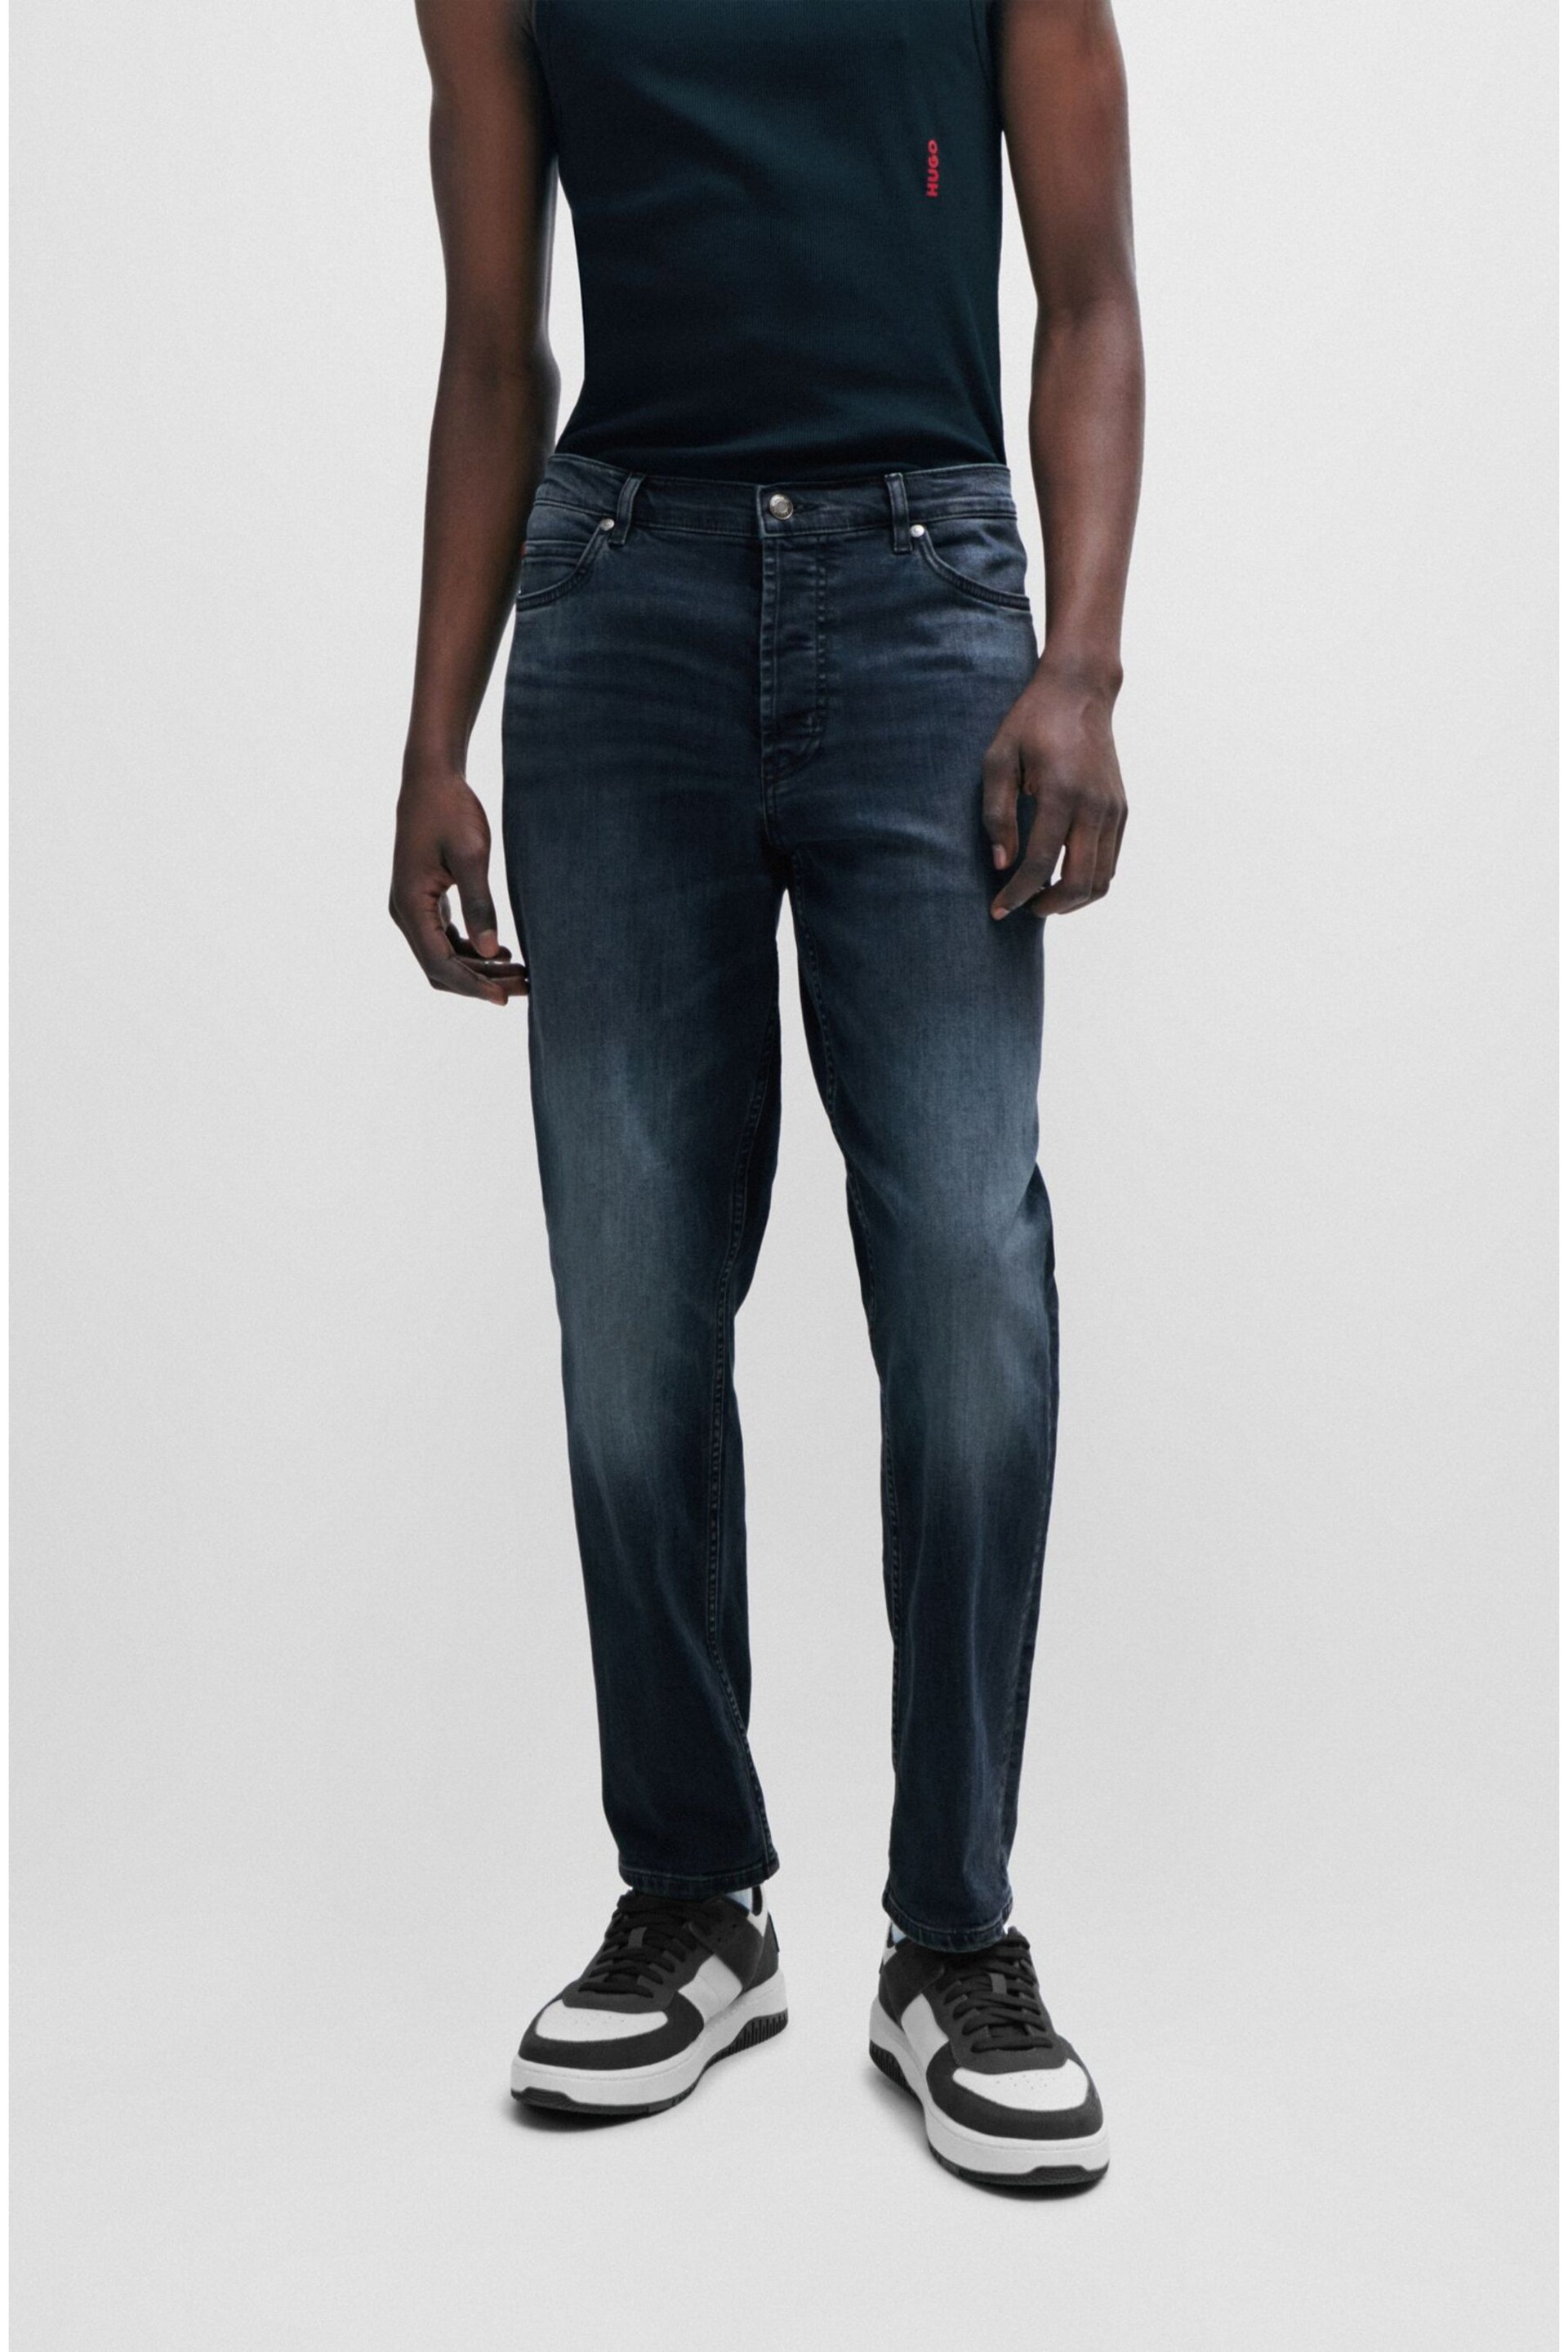 HUGO Tapered-Fit Jeans in Dark-Blue Comfort-Stretch Denim - Image 1 of 5